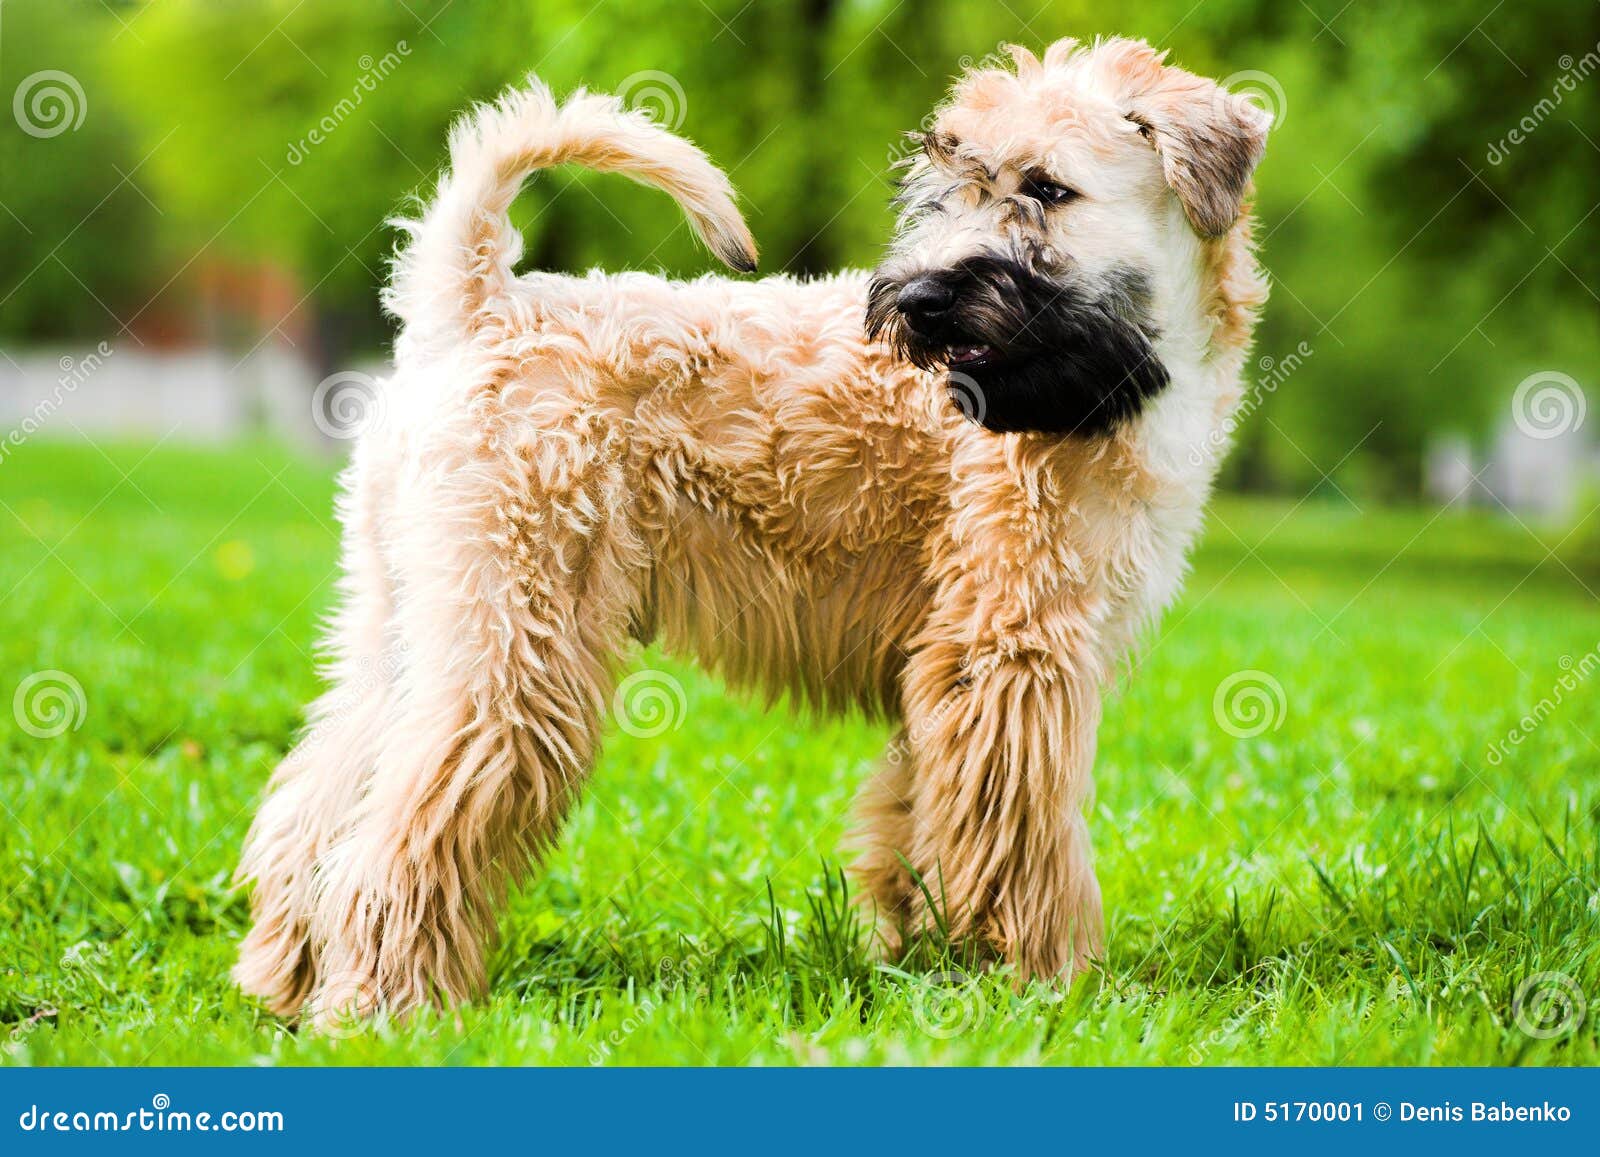 Irish Soft Coated Wheaten Terrier Stock Image Image Of Outdoor